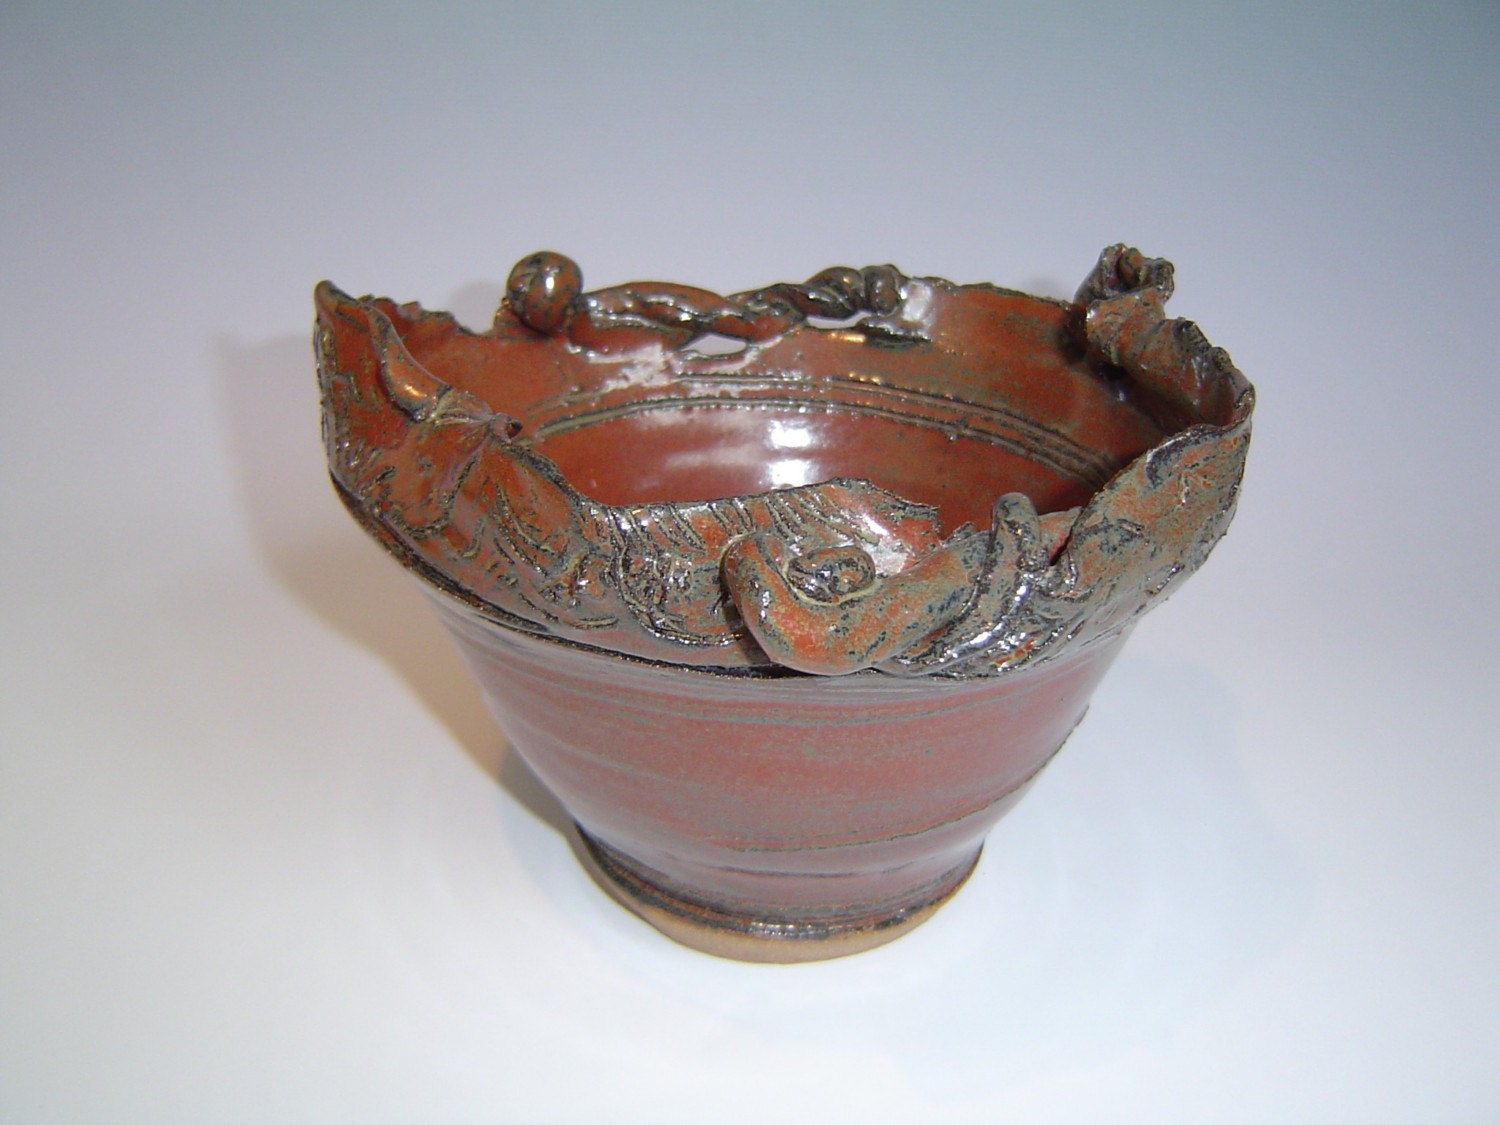 Hephaestus Bowl - red, decorative vase/bowl - handmade ceramic pottery